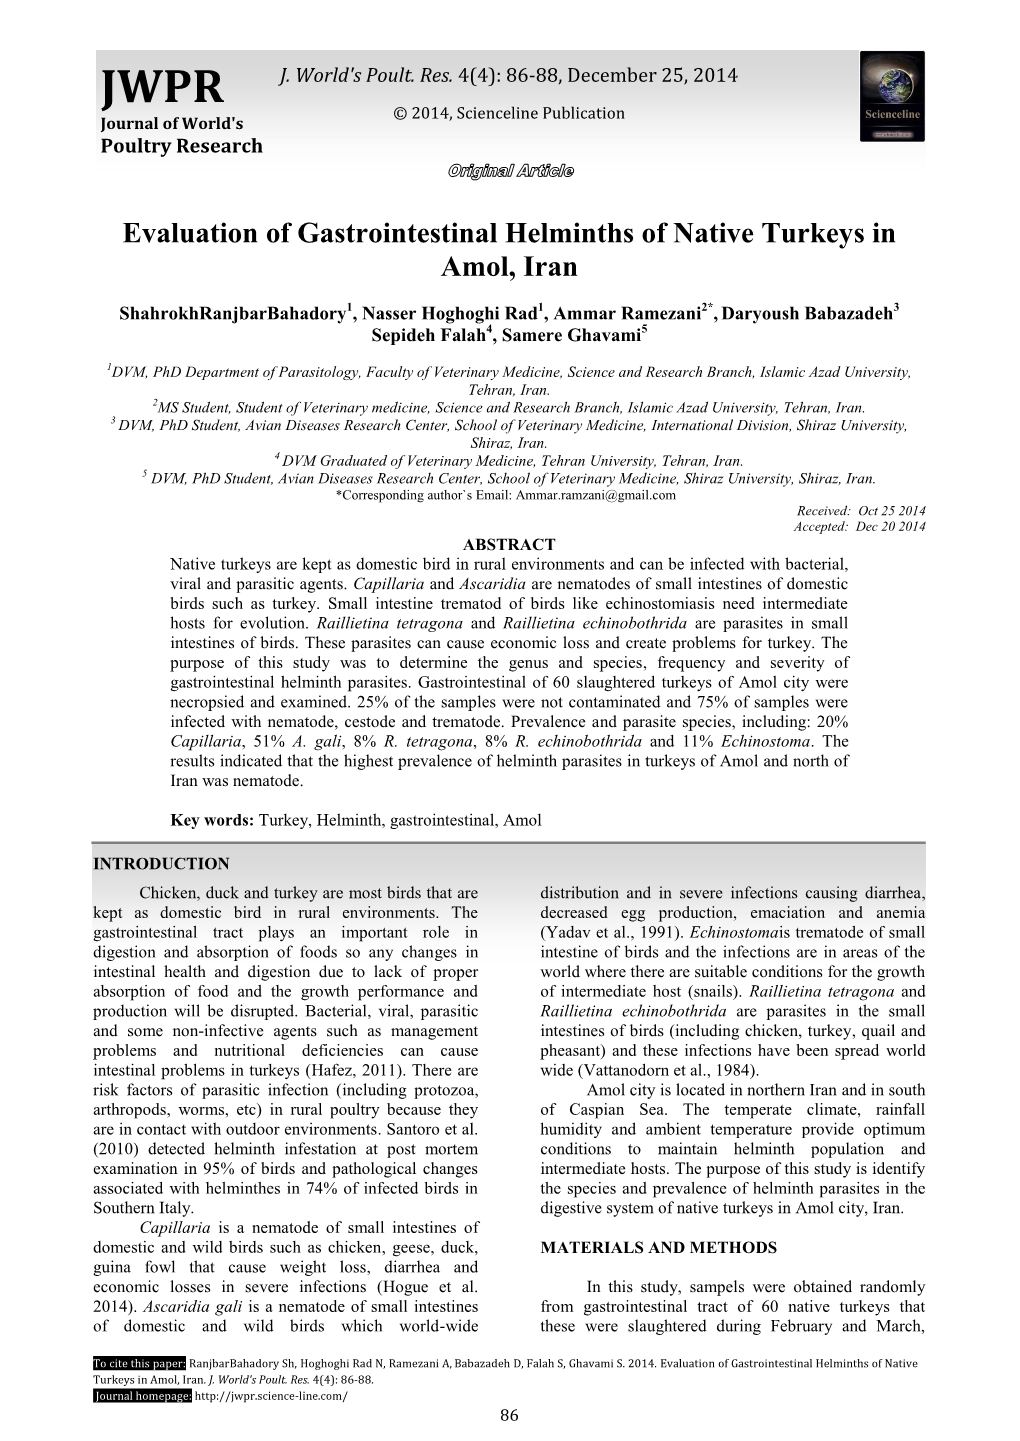 Evaluation of Gastrointestinal Helminths of Native Turkeys in Amol, Iran